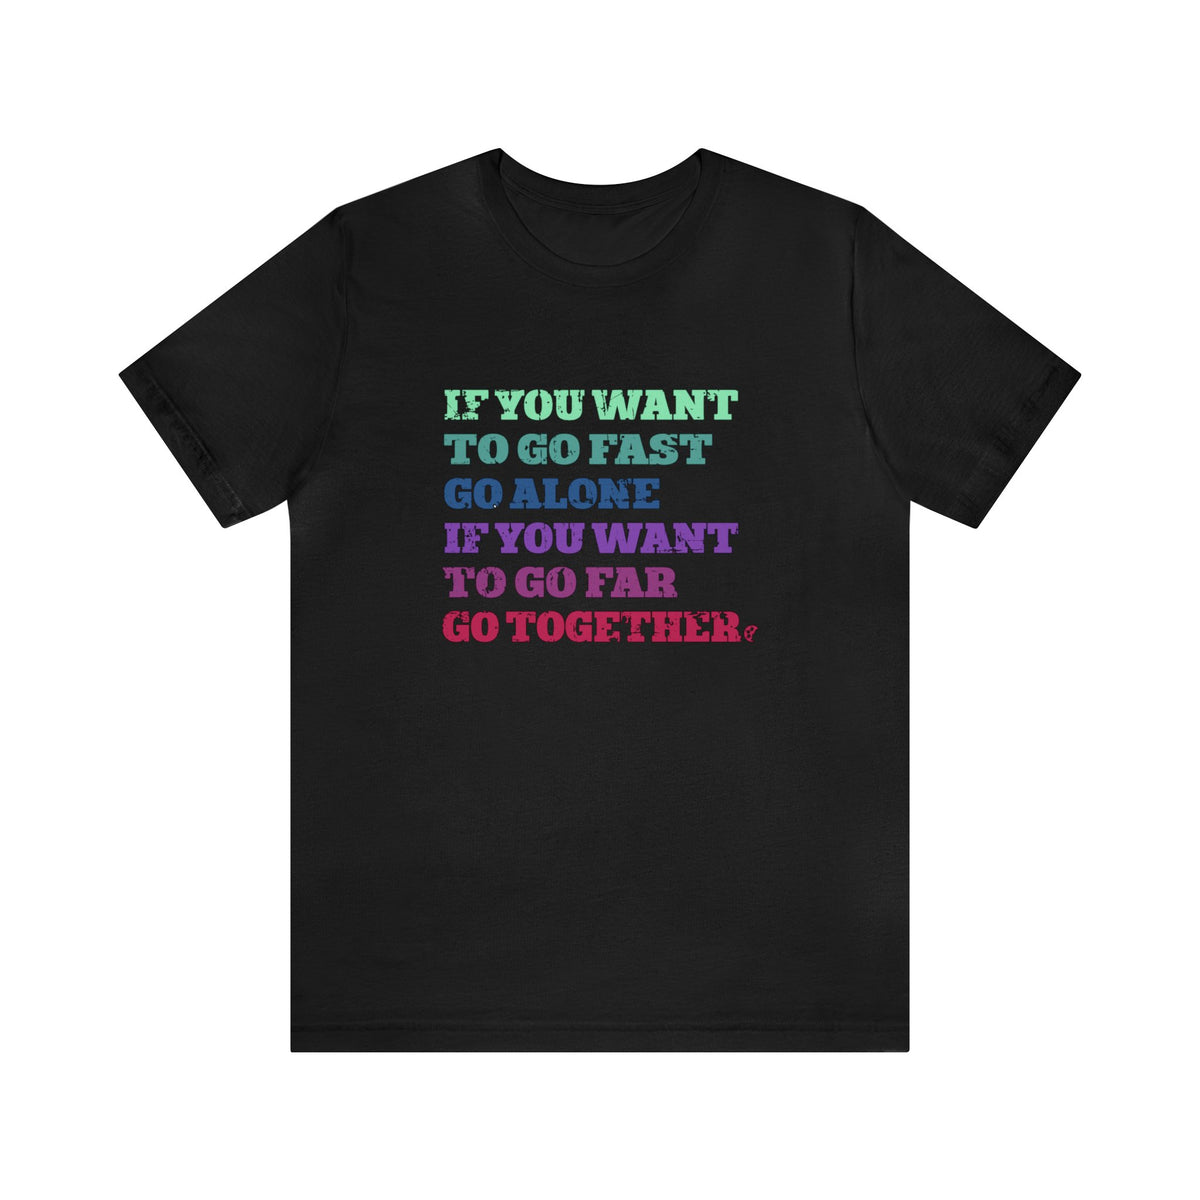 Go Far Together Adult T-Shirt